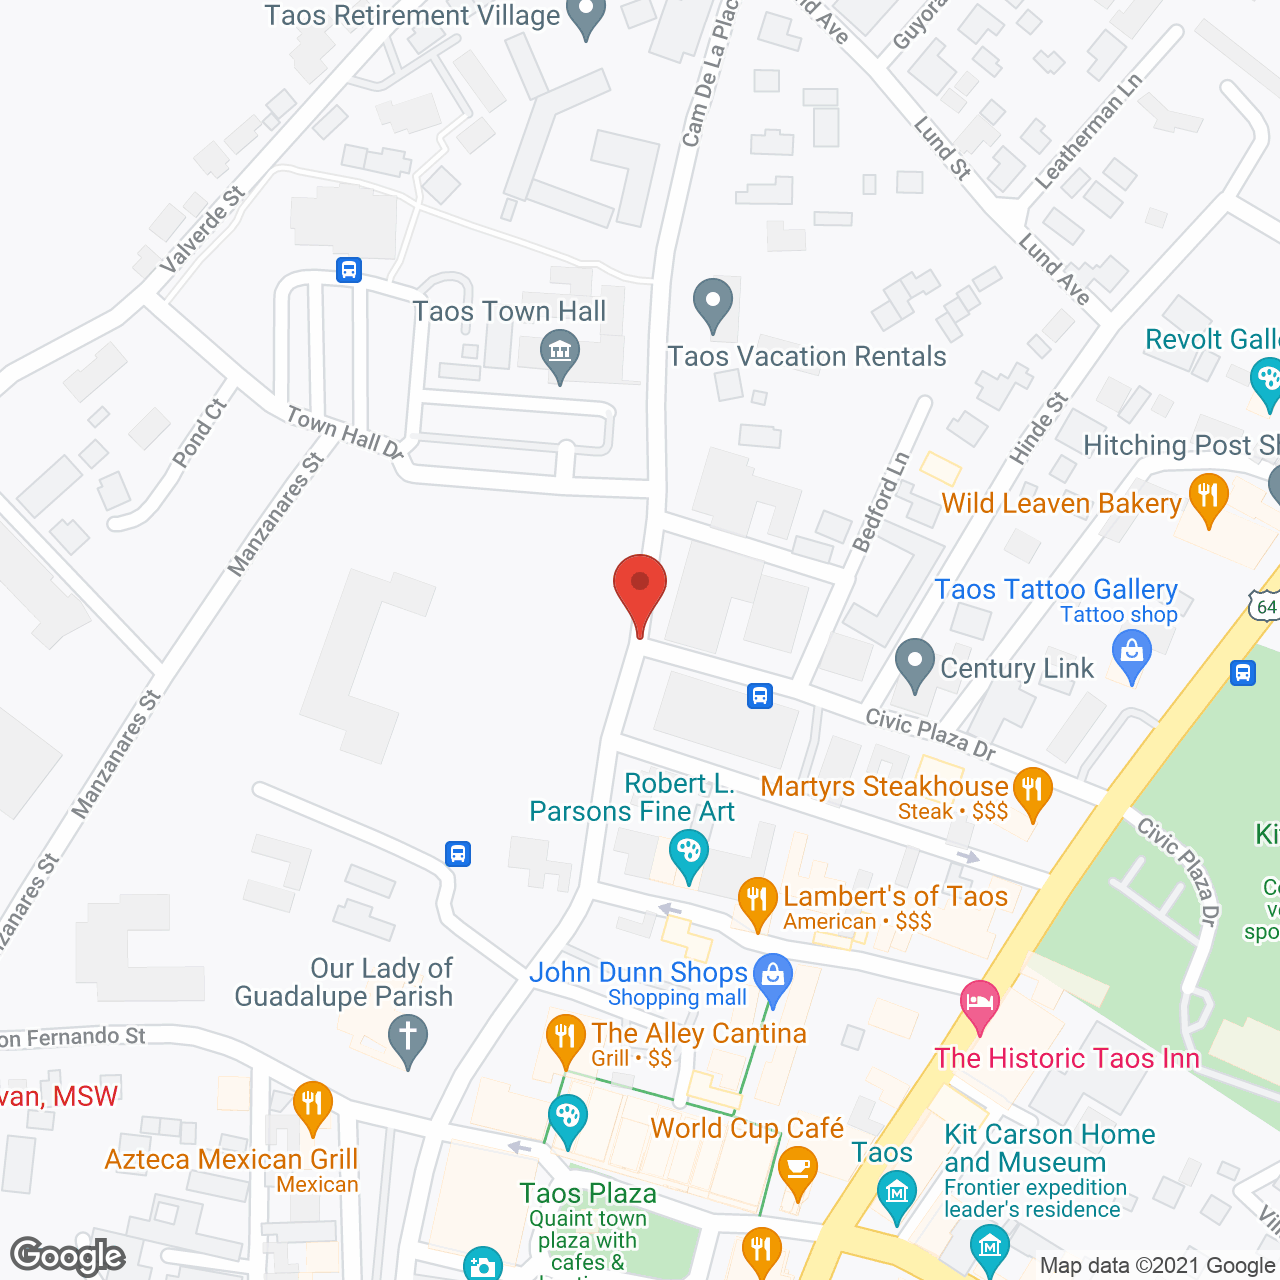 Taos Retirement Village in google map